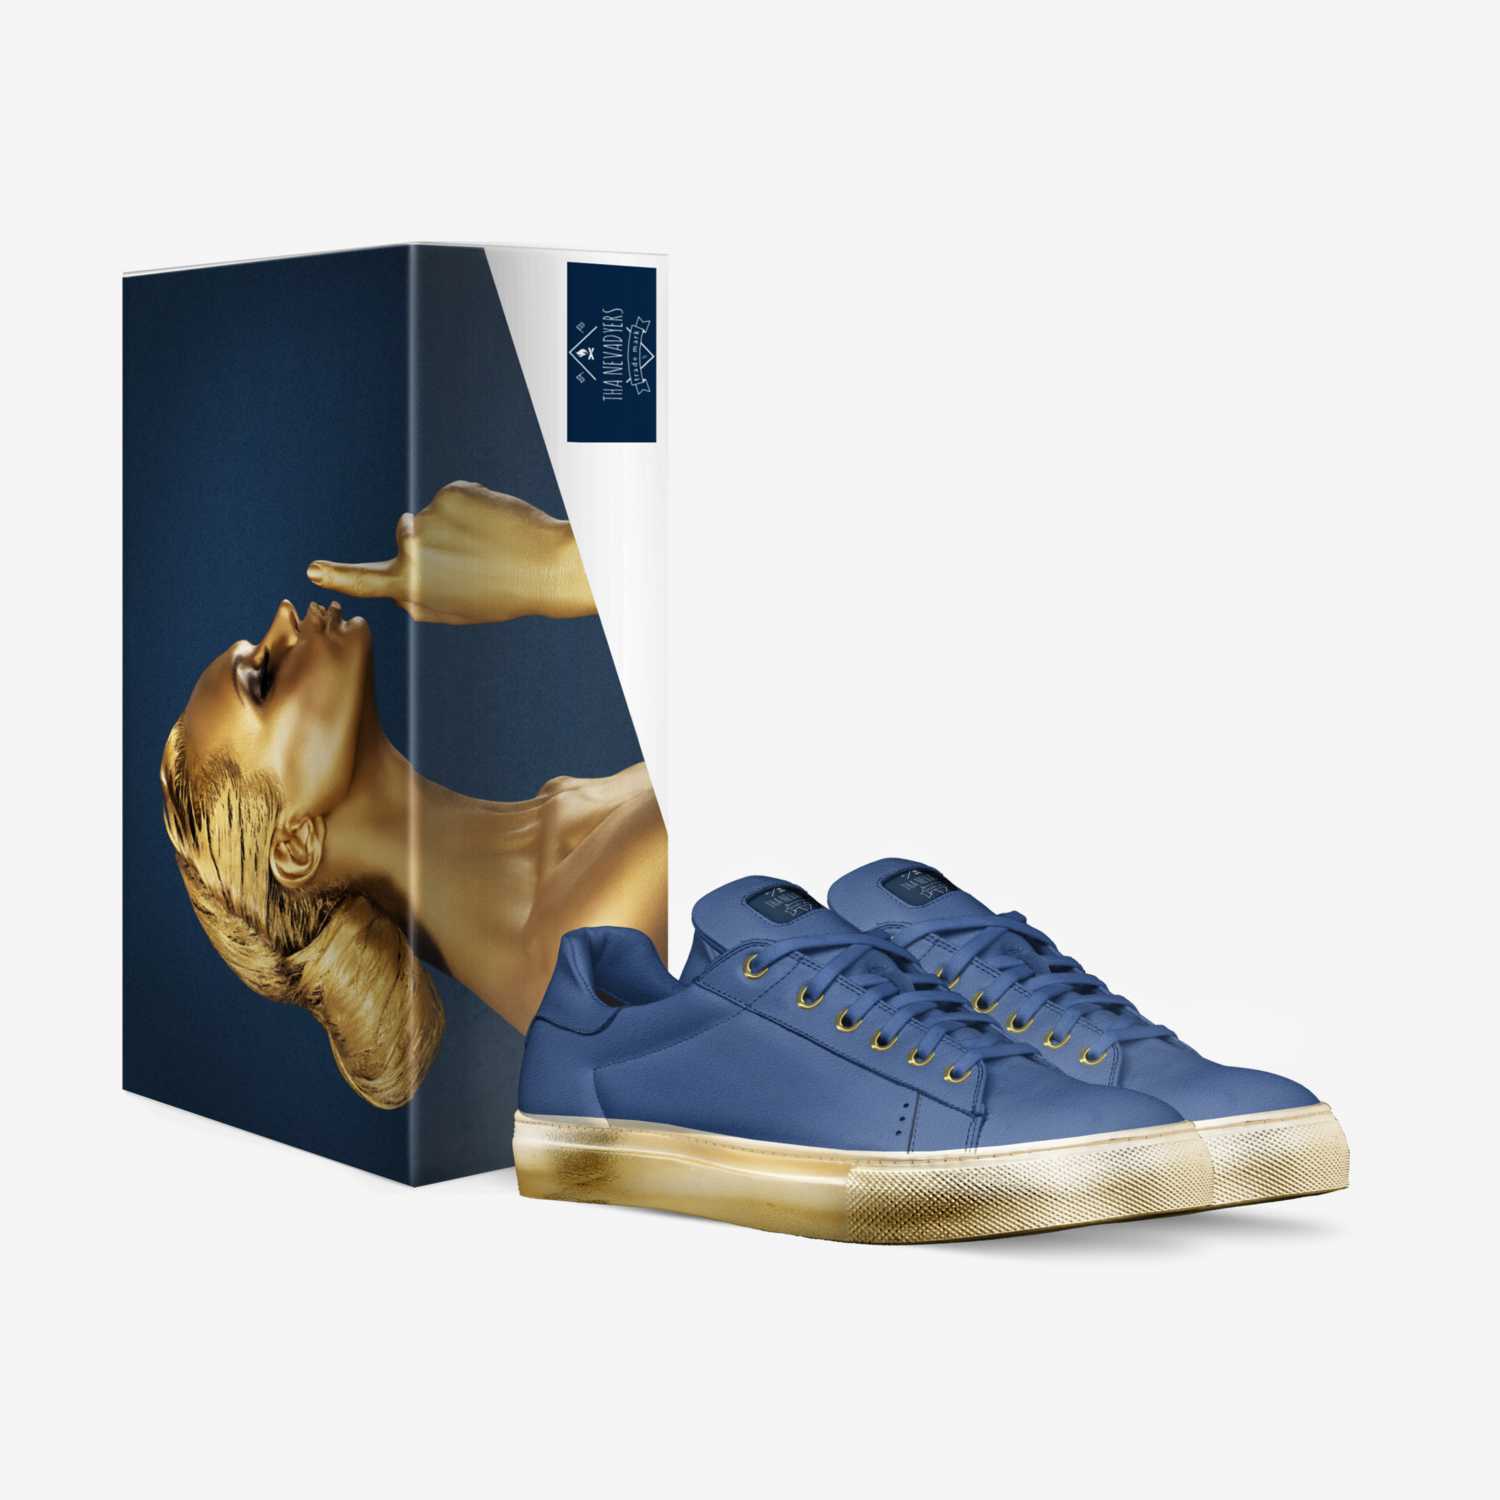 Gaddafi Blue custom made in Italy shoes by Galatikz Dixon | Box view